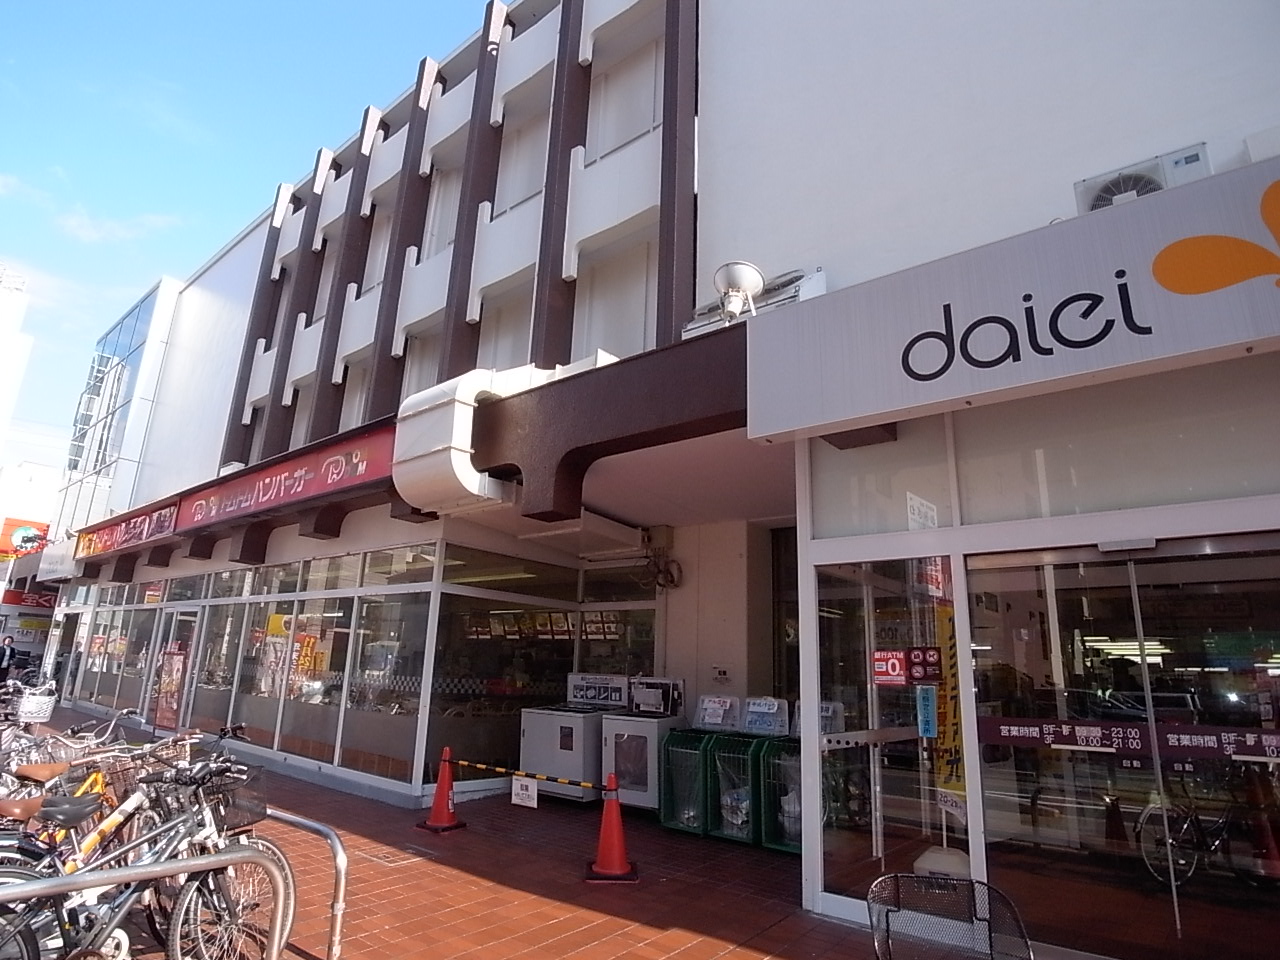 Shopping centre. 948m to Daiei Imaike store (shopping center)